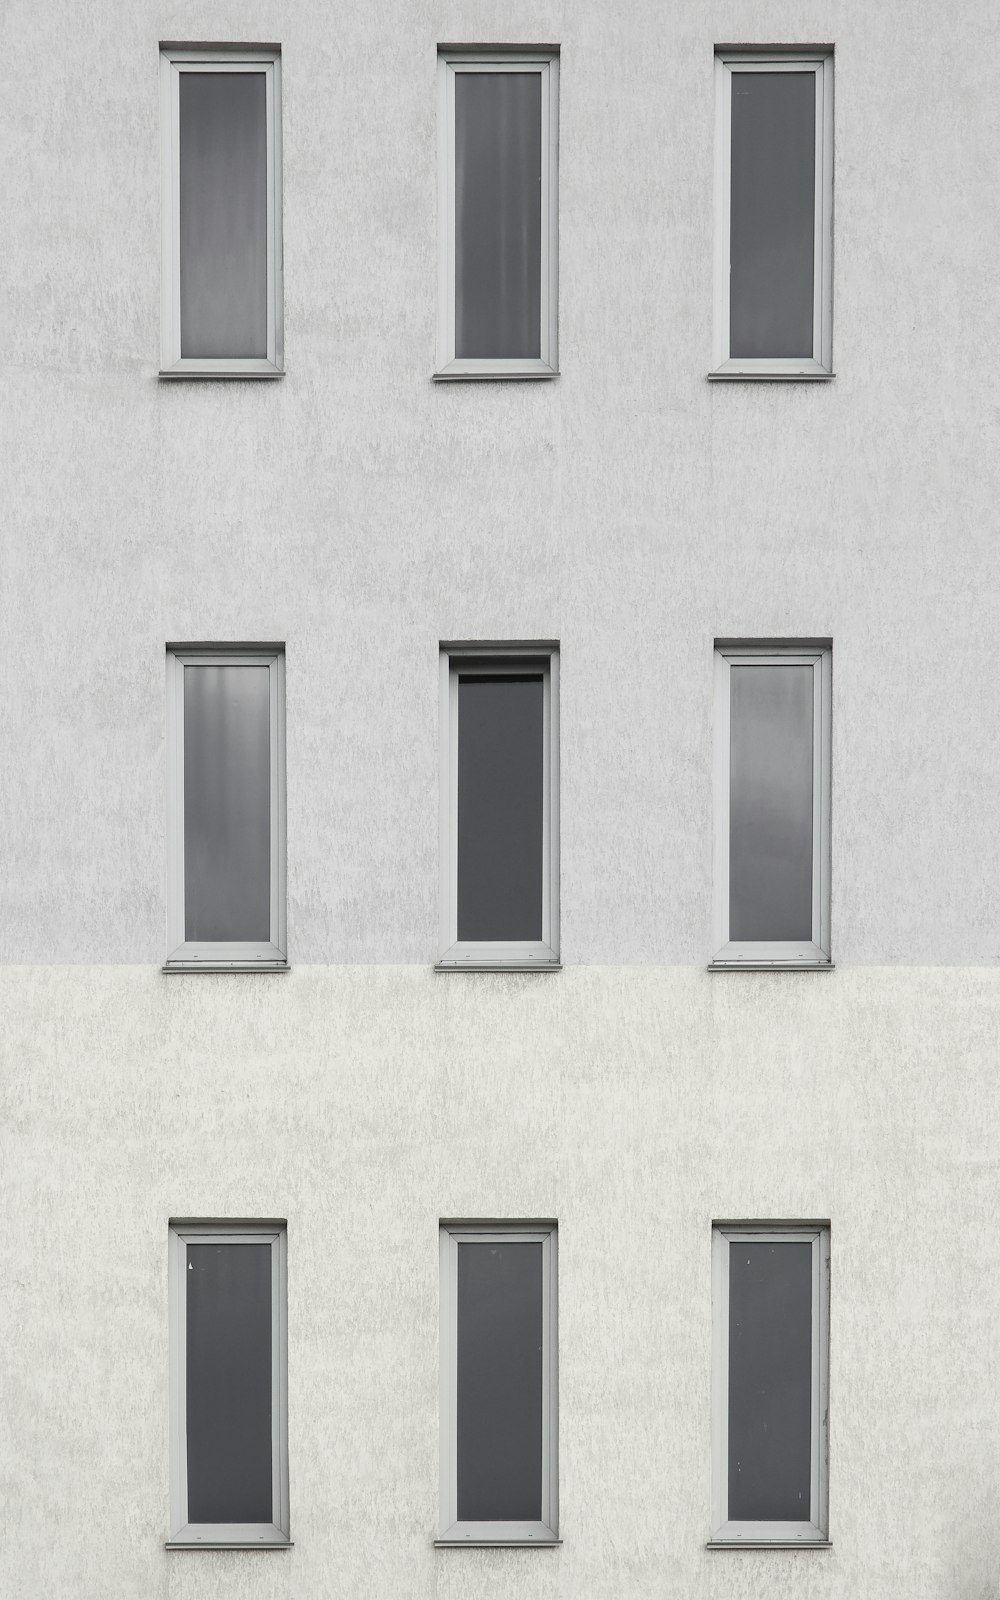 9 building windows